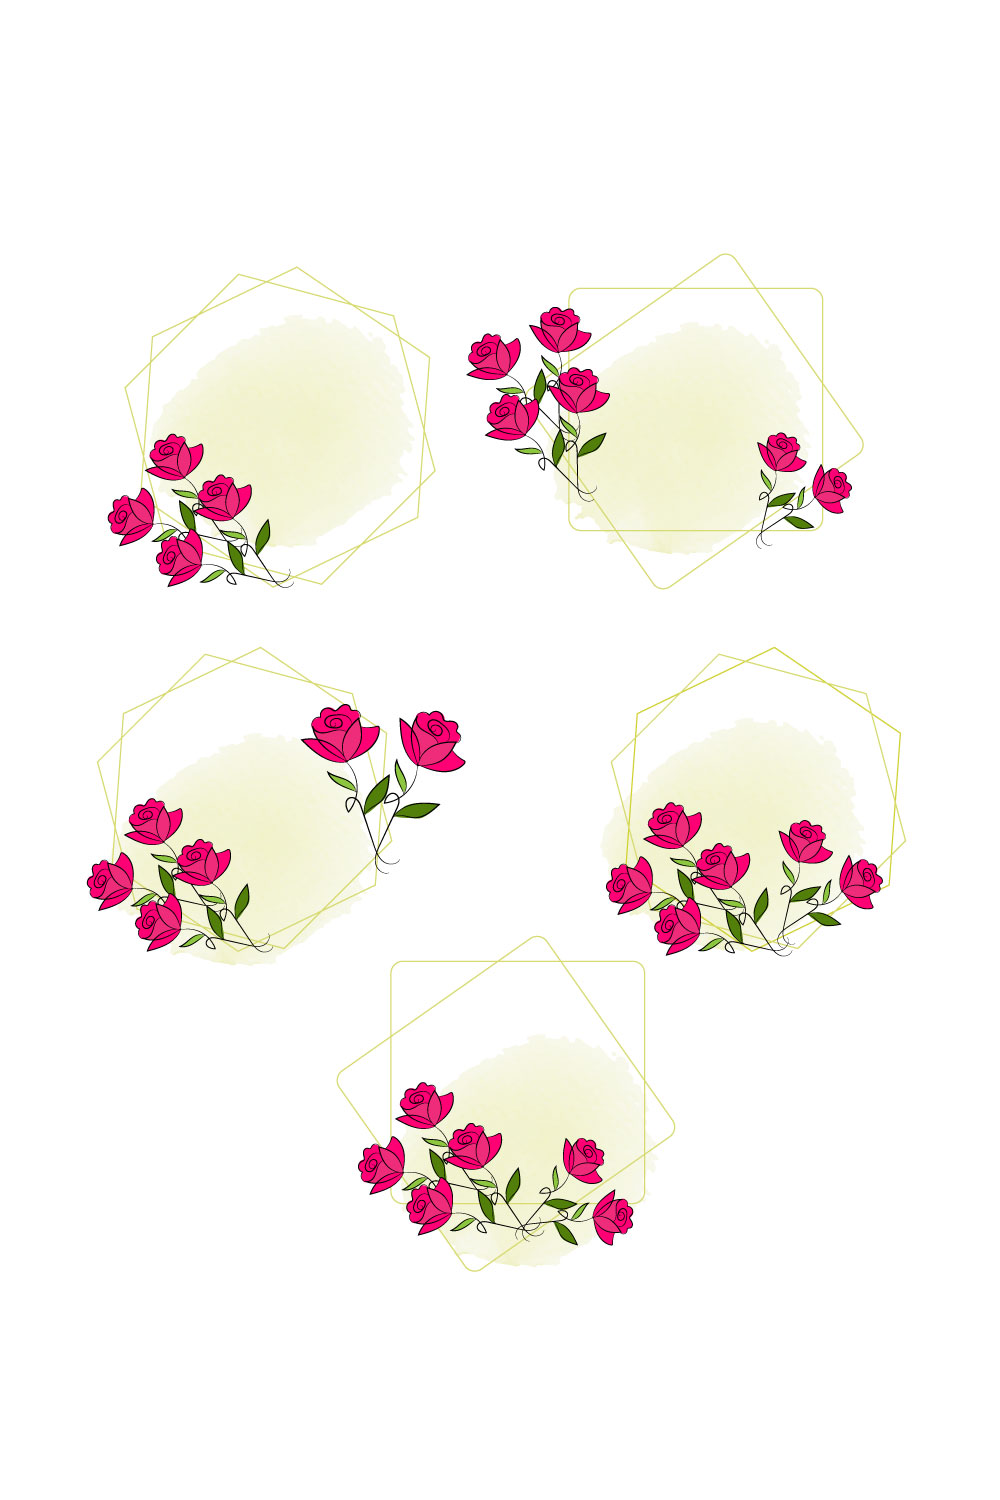 Floral logo pinterest preview image.